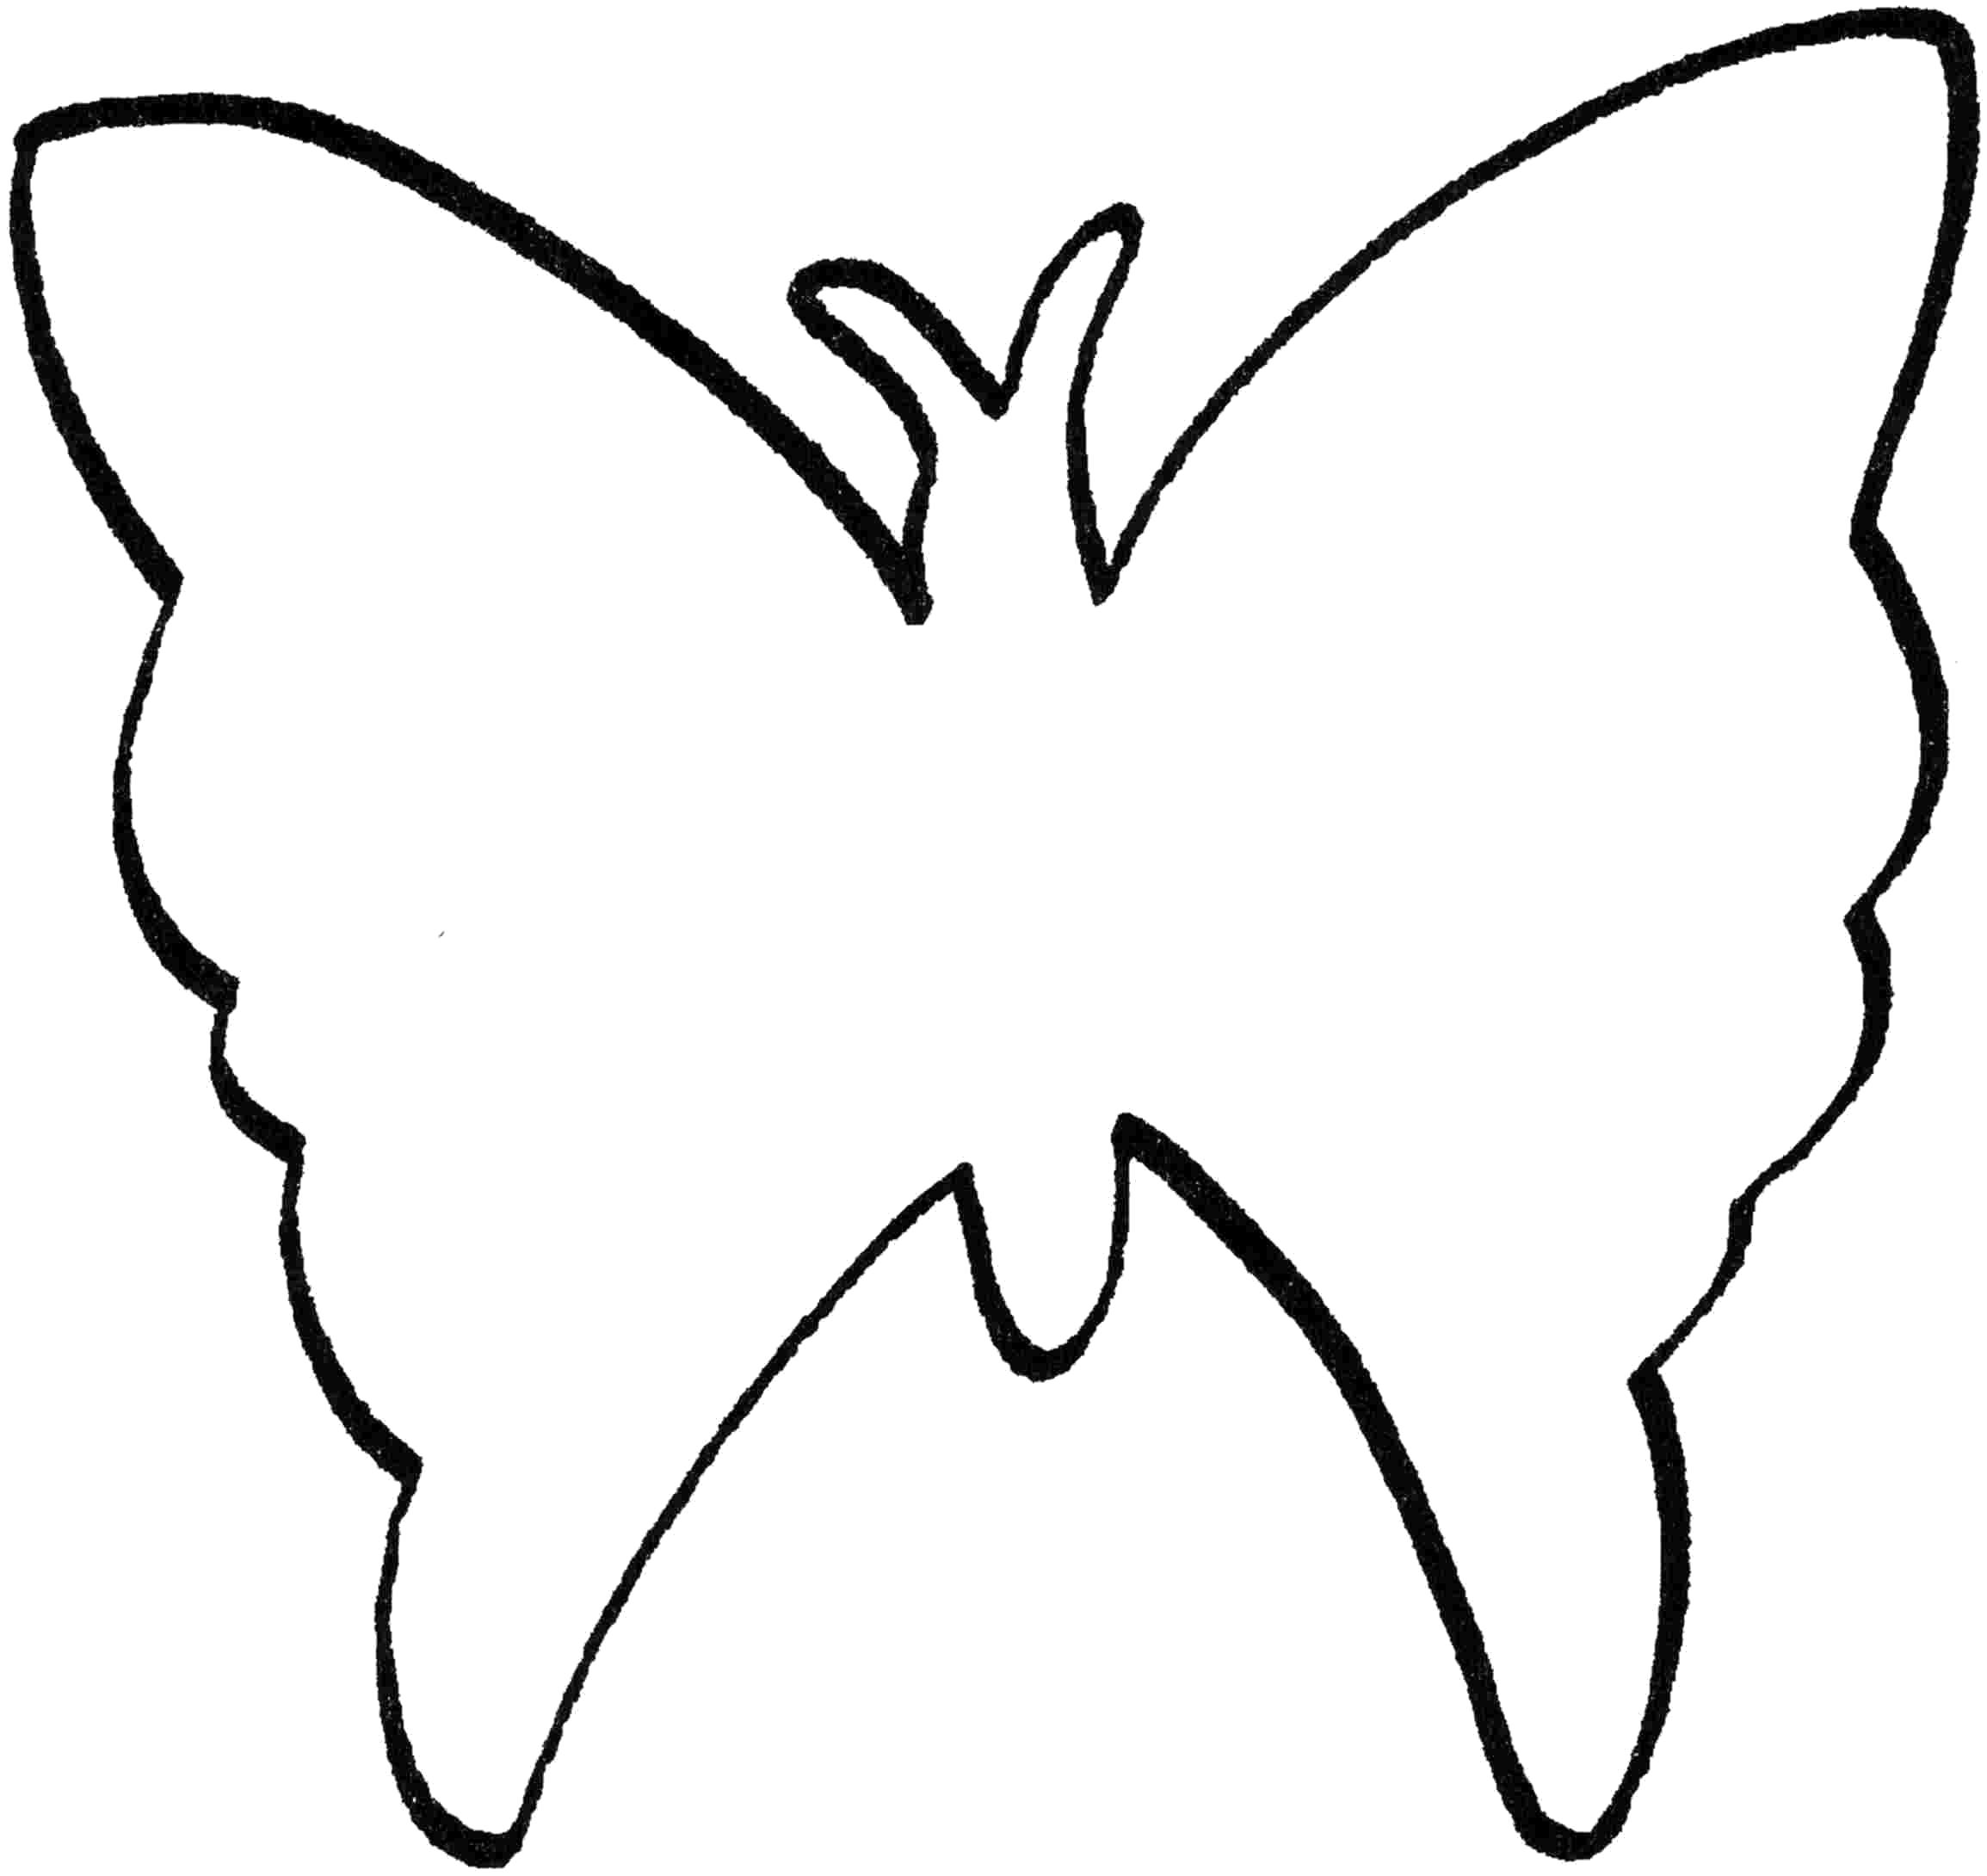 Название: Раскраска Контур бабочки. Категория: бабочка. Теги: бабочка.